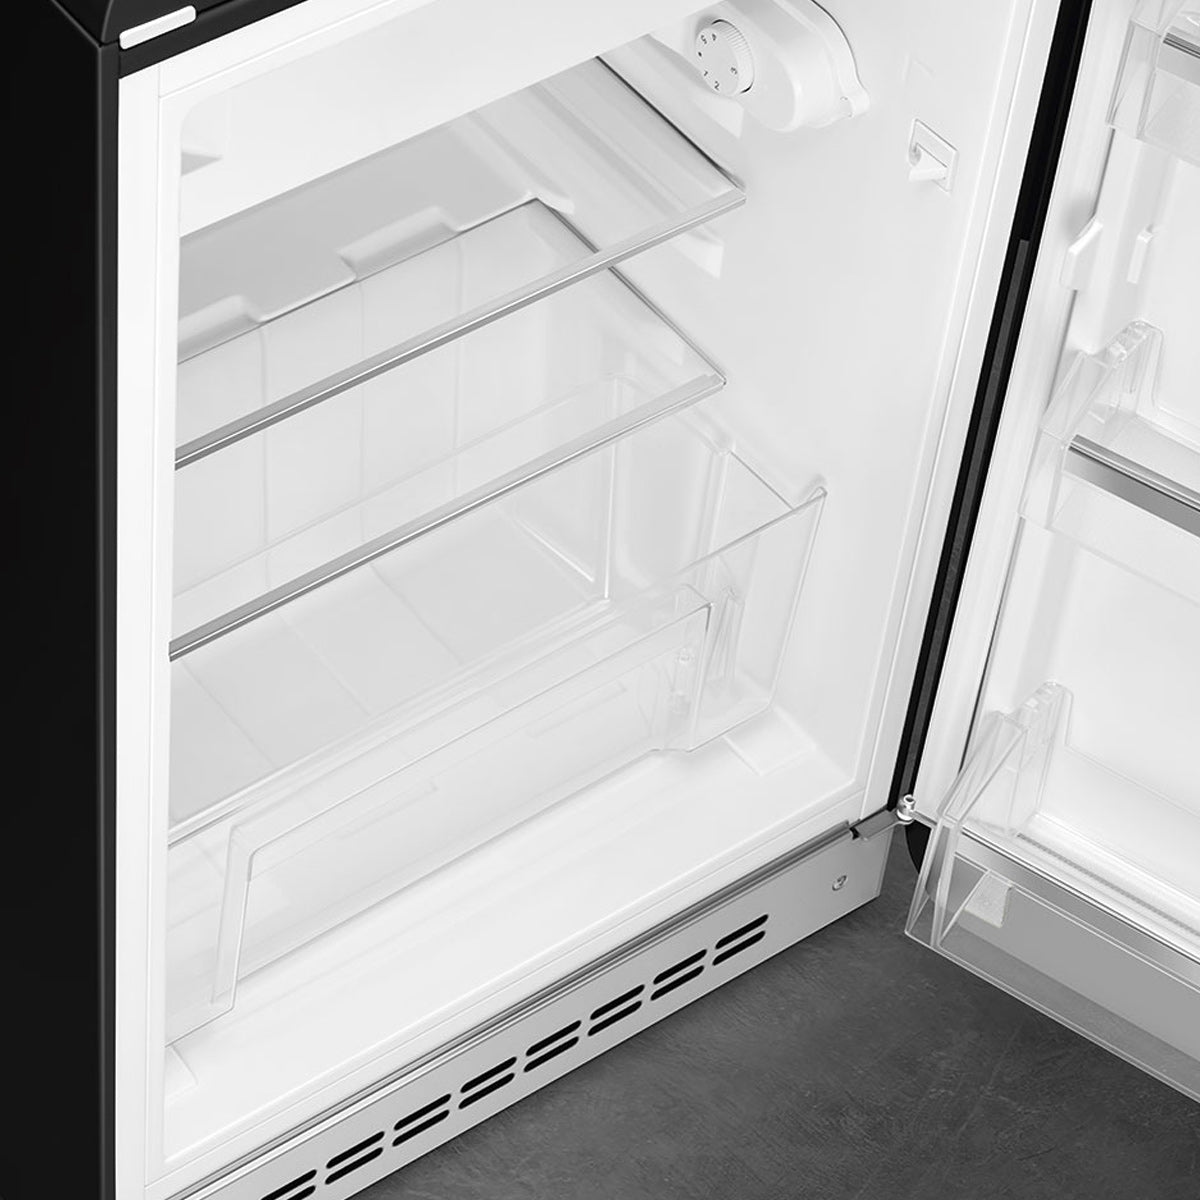 Refrigerator Pastel green FAB5RPG3